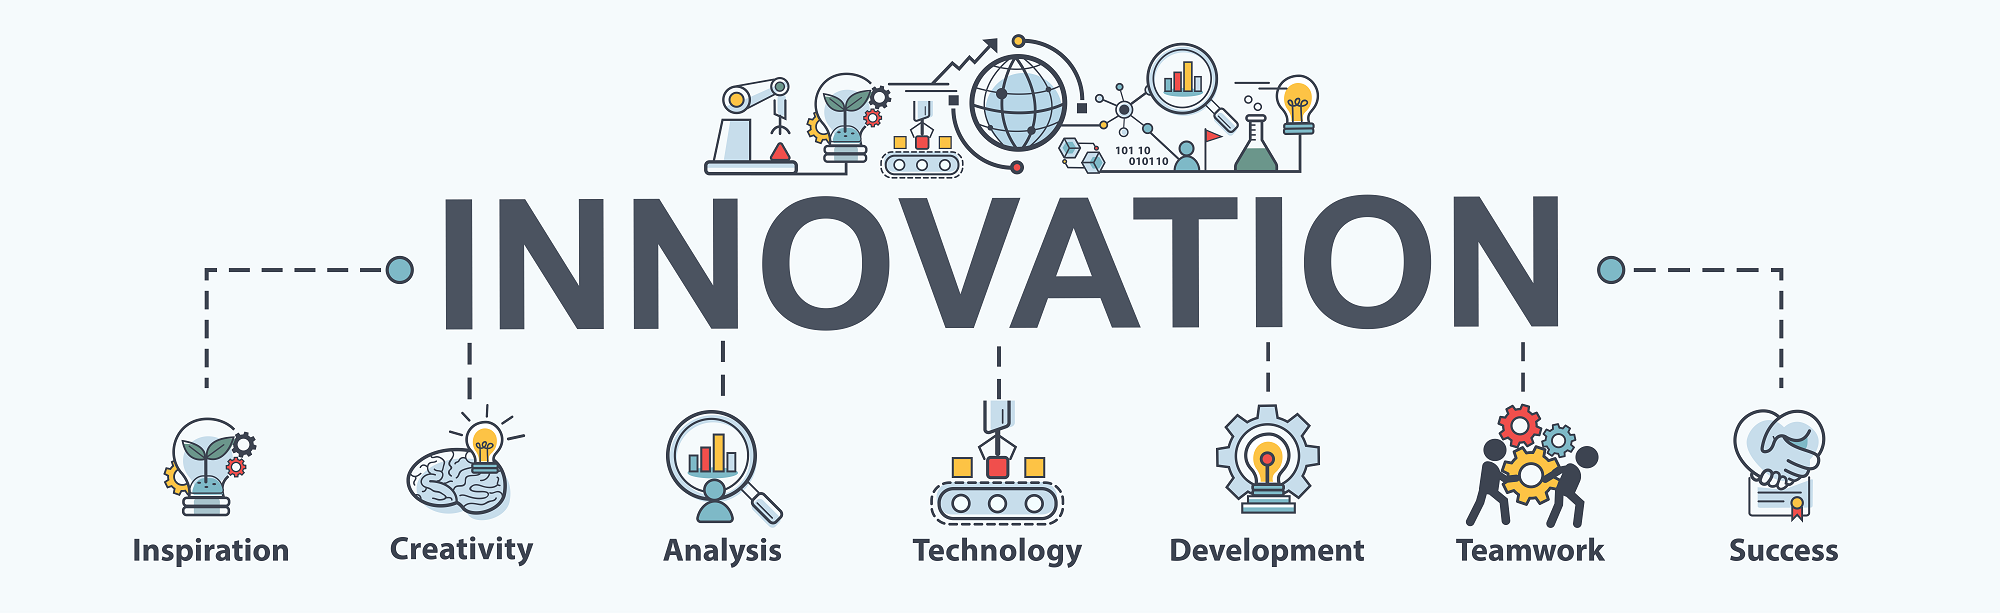 European Institute of Innovation and Technology (EIT): Regulation and new strategic innovation agenda [EU Legislation in Progress]